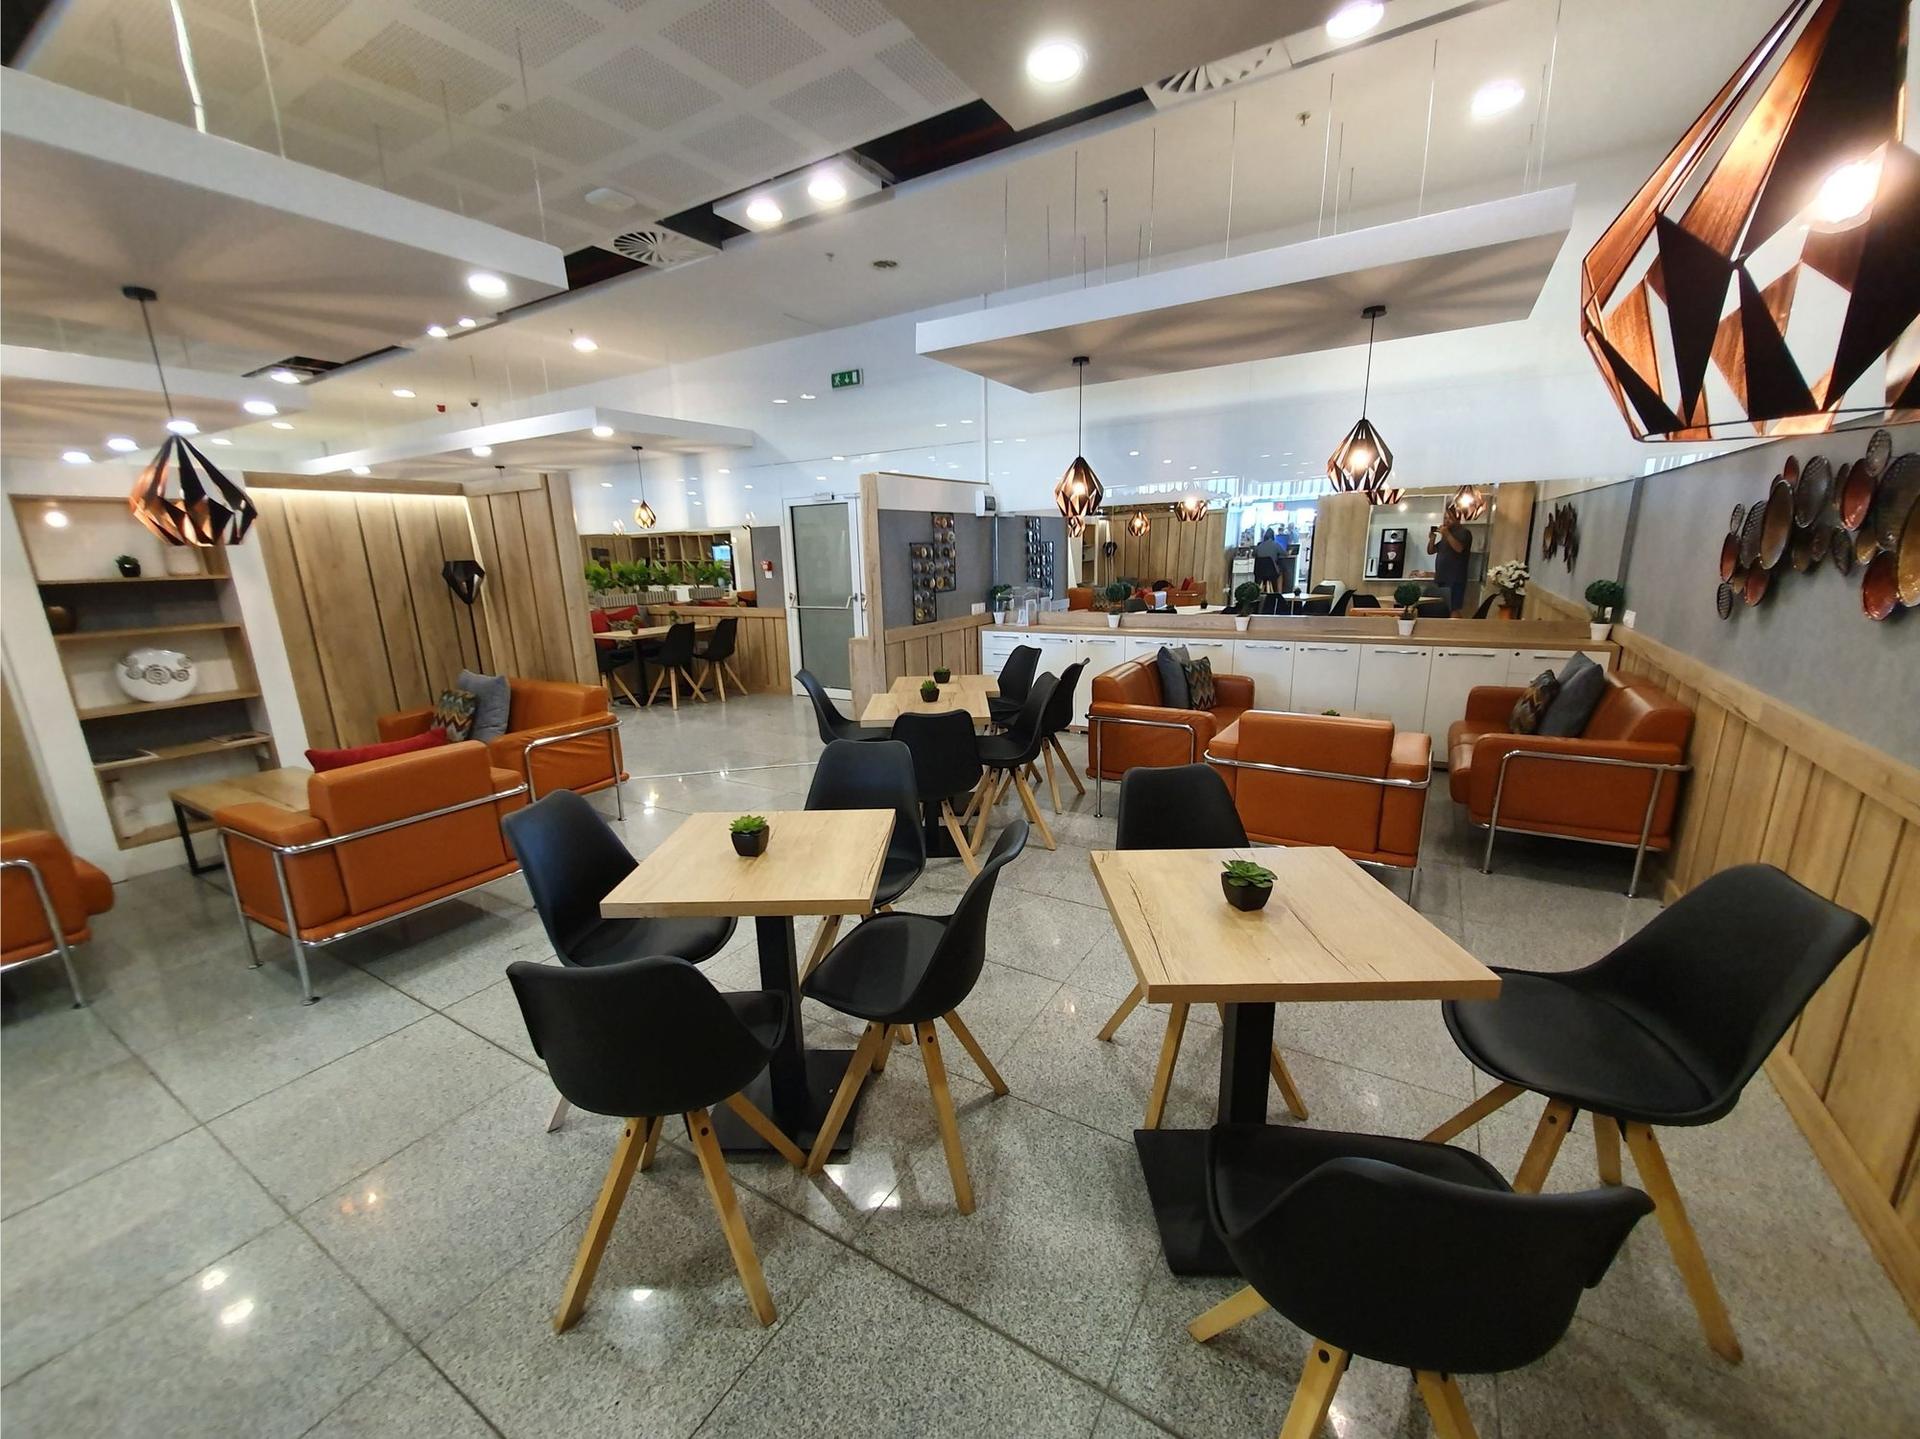 Burgas Airport Lounge image 1 of 43